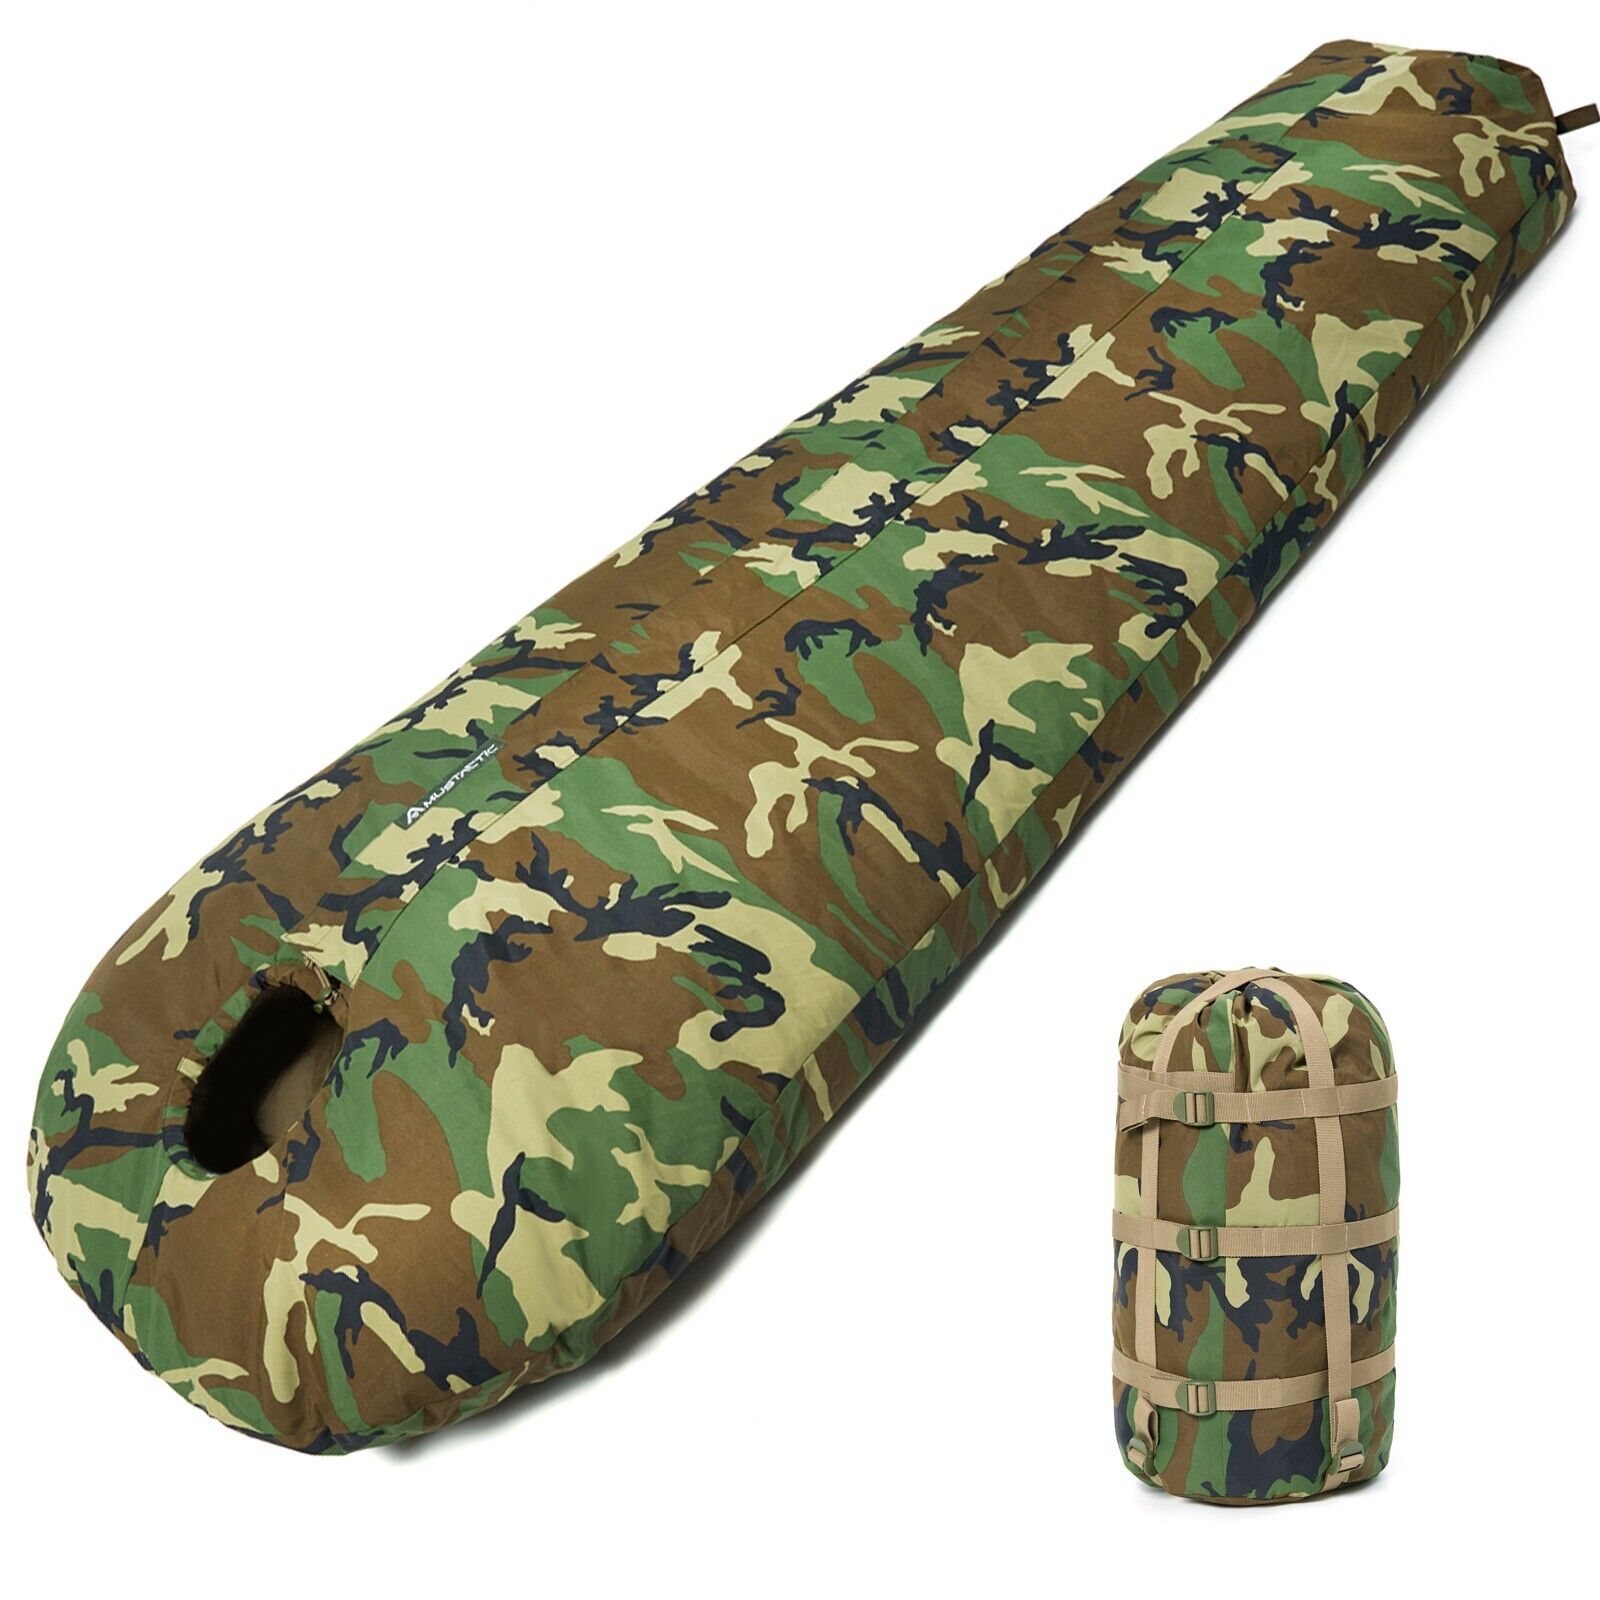 MT Military Modular Rifleman GM Sleeping Bag 2.0 with Bivy Cover, Woodland